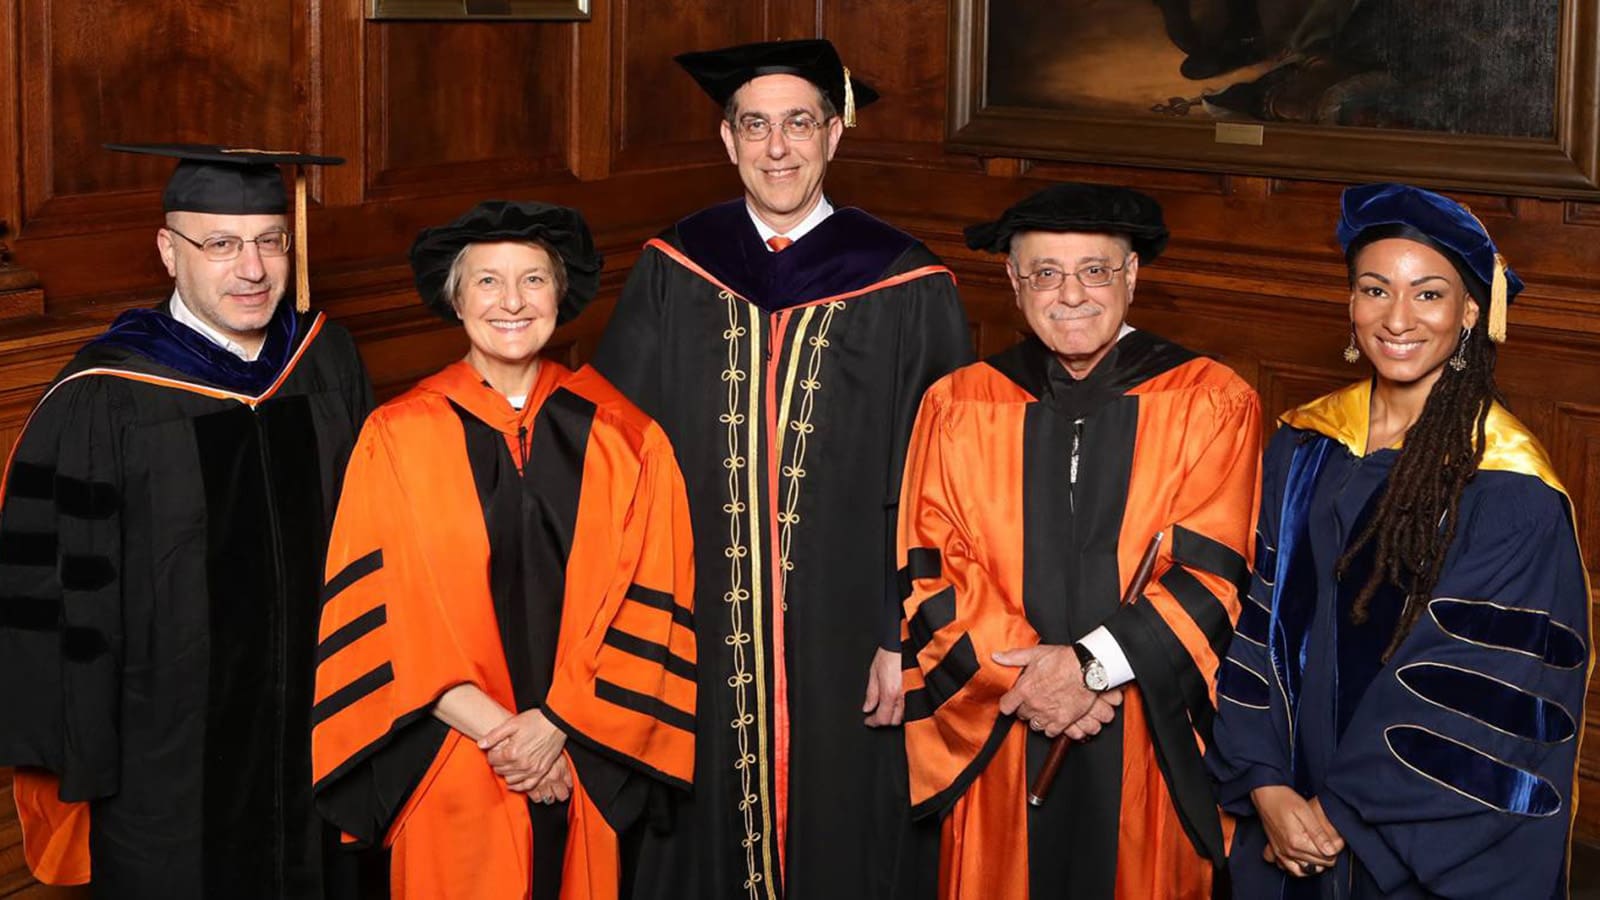 Award winners pose with Princeton President Christopher L. Eisgruber